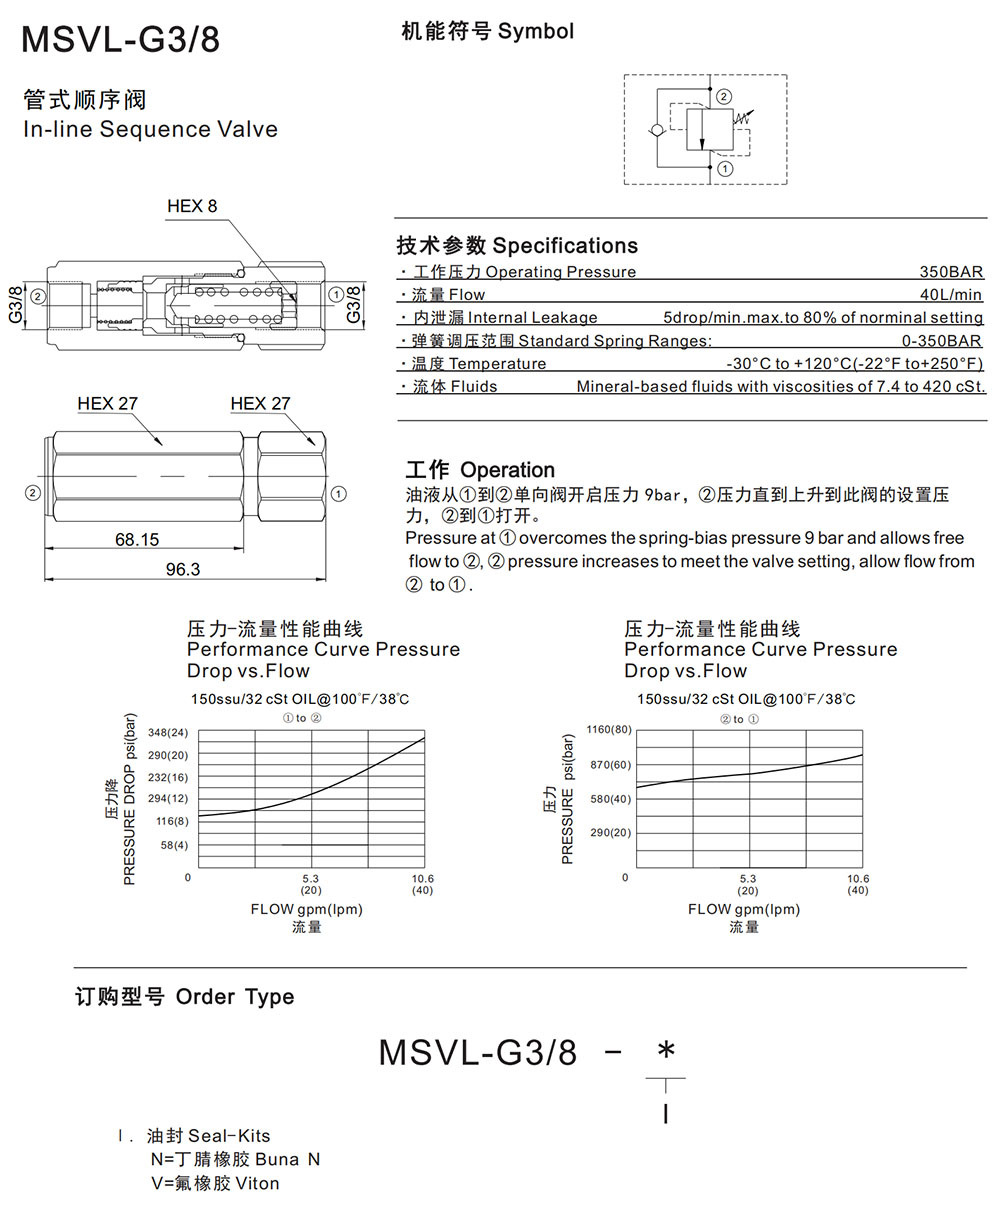 MSVL-G3/8